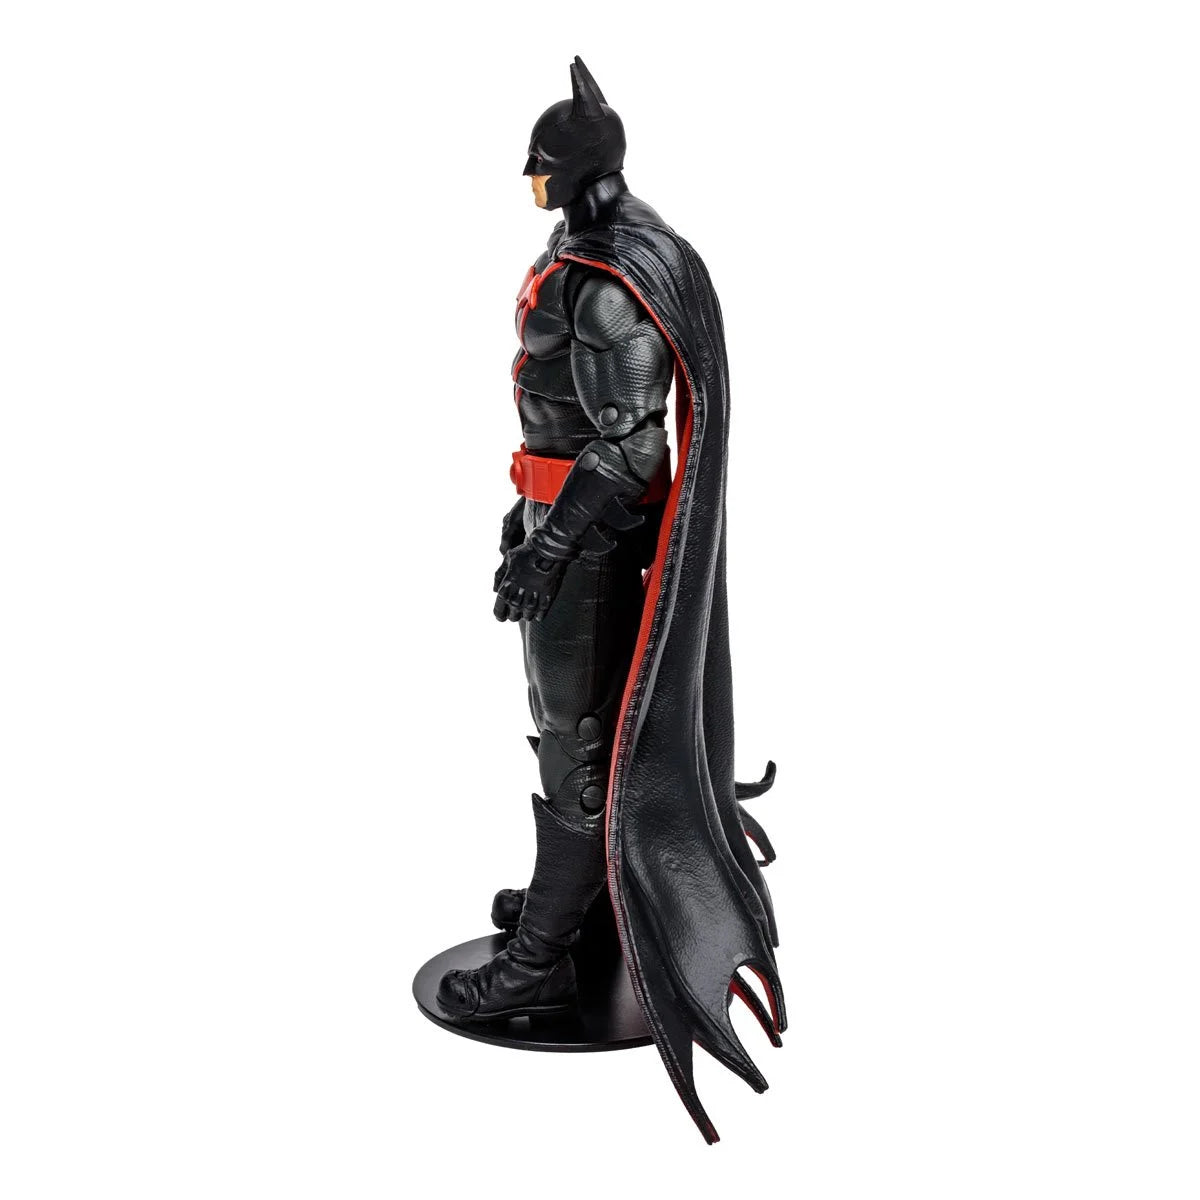 McFarlane Figura de Accion: DC Gaming Batman Arkham Knight - Batman Tierra 2 7 Pulgadas